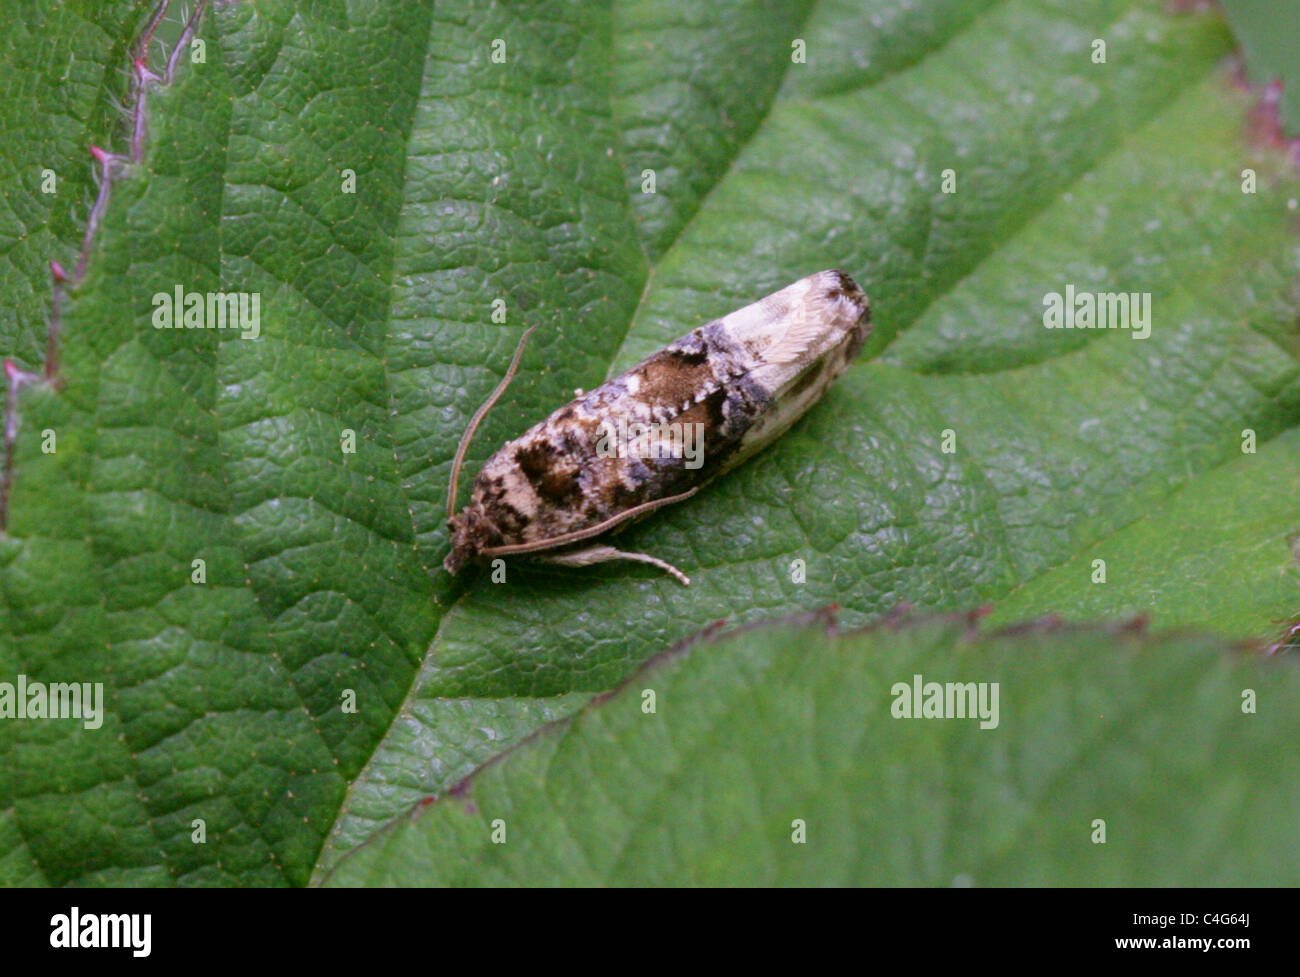 Micro-moth, Lepidoptera. Stock Photo